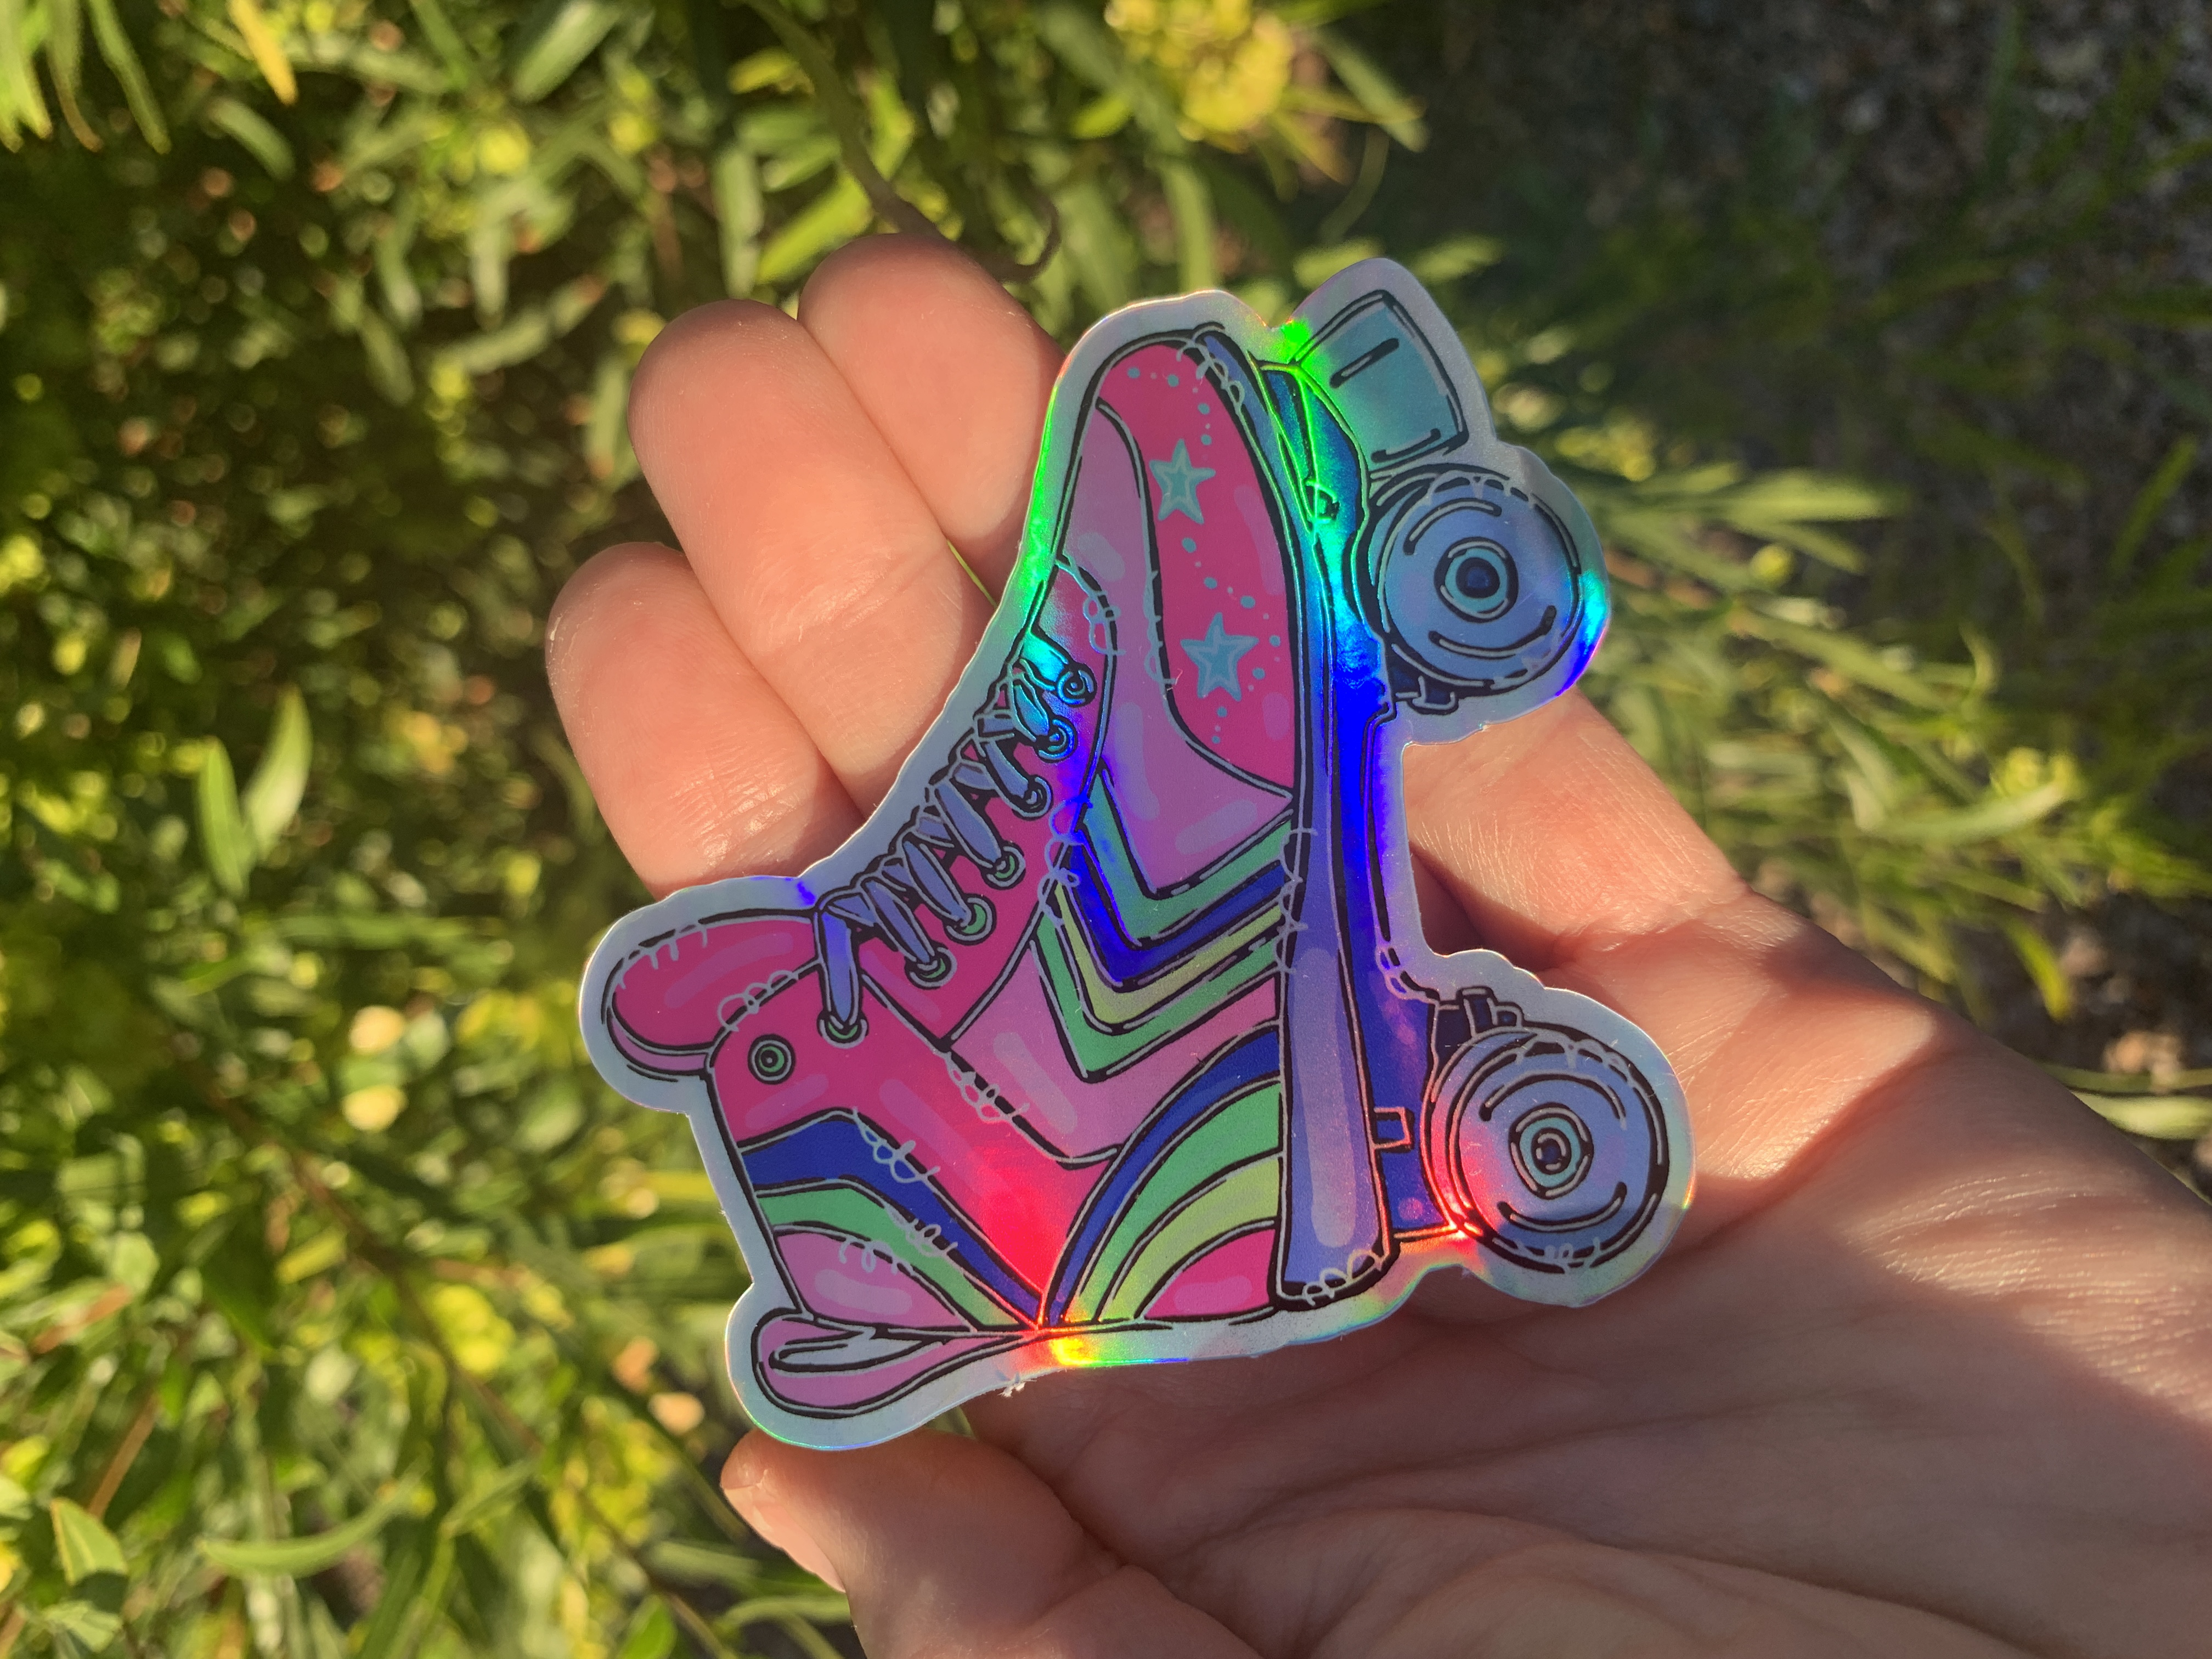 Roller Skate Holographic Sticker